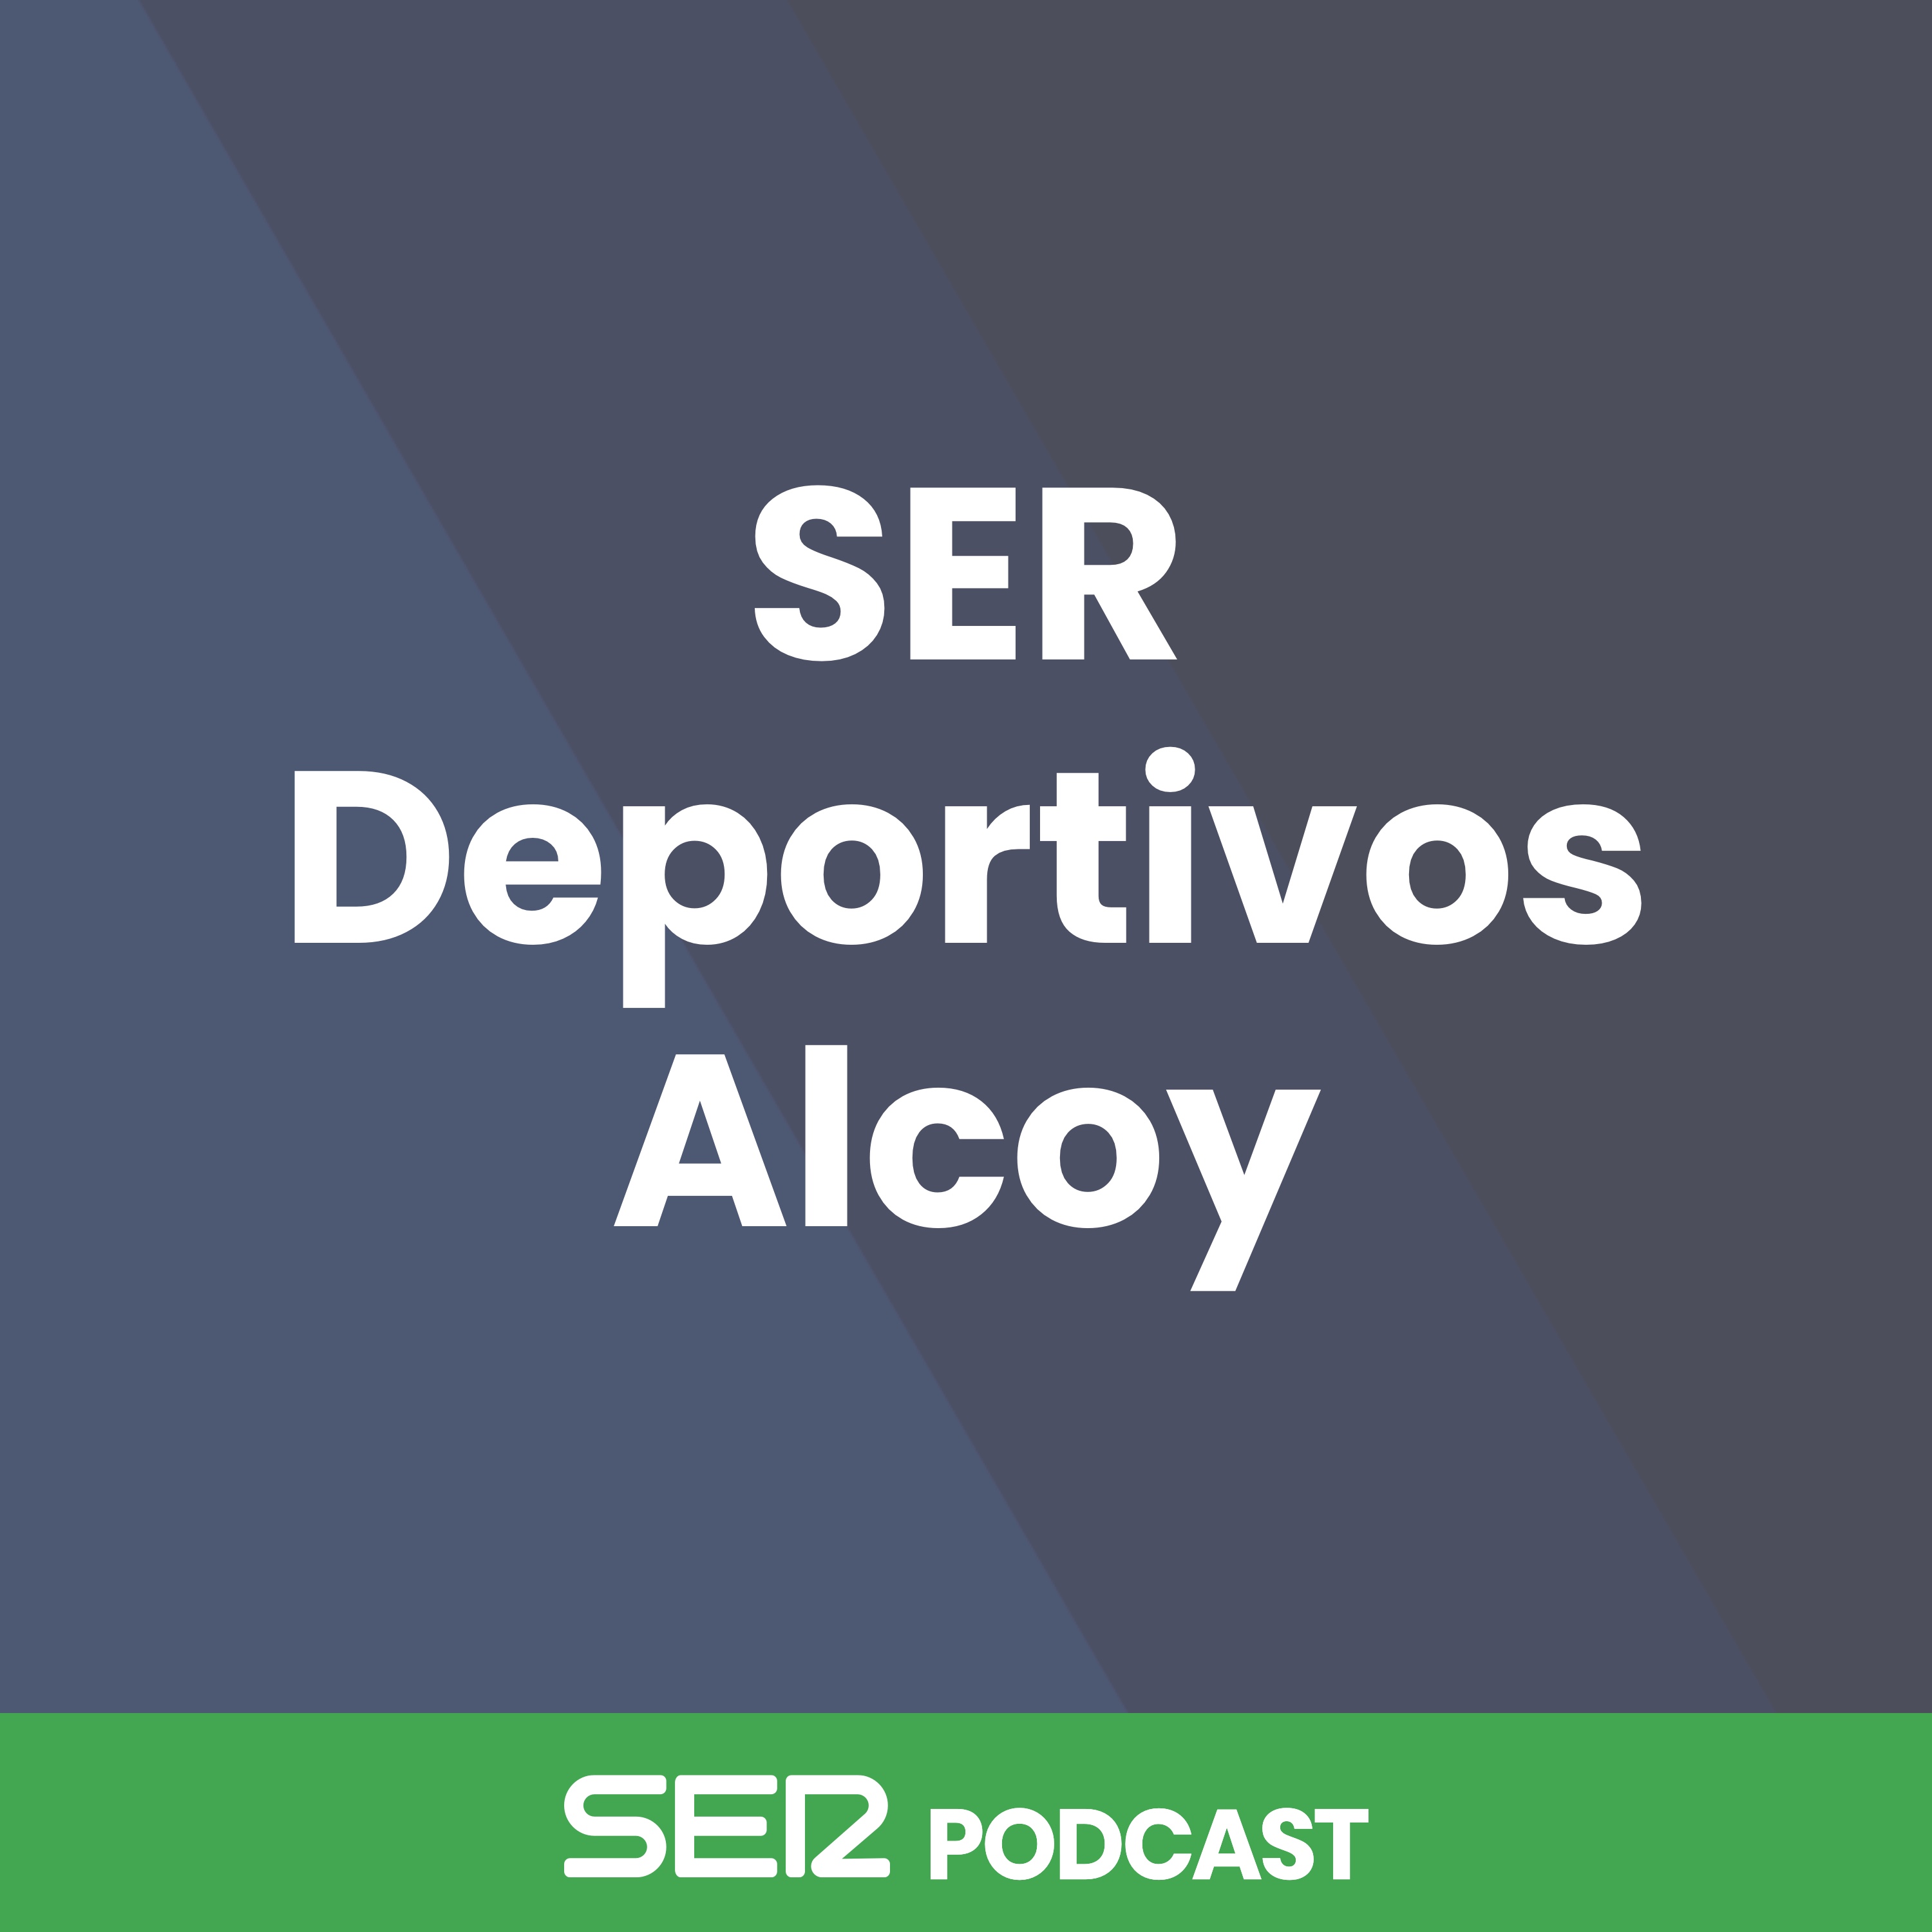 George Eliot primero Marco Polo SER Podcast: Escucha todos los episodios de SER Deportivos Alcoy